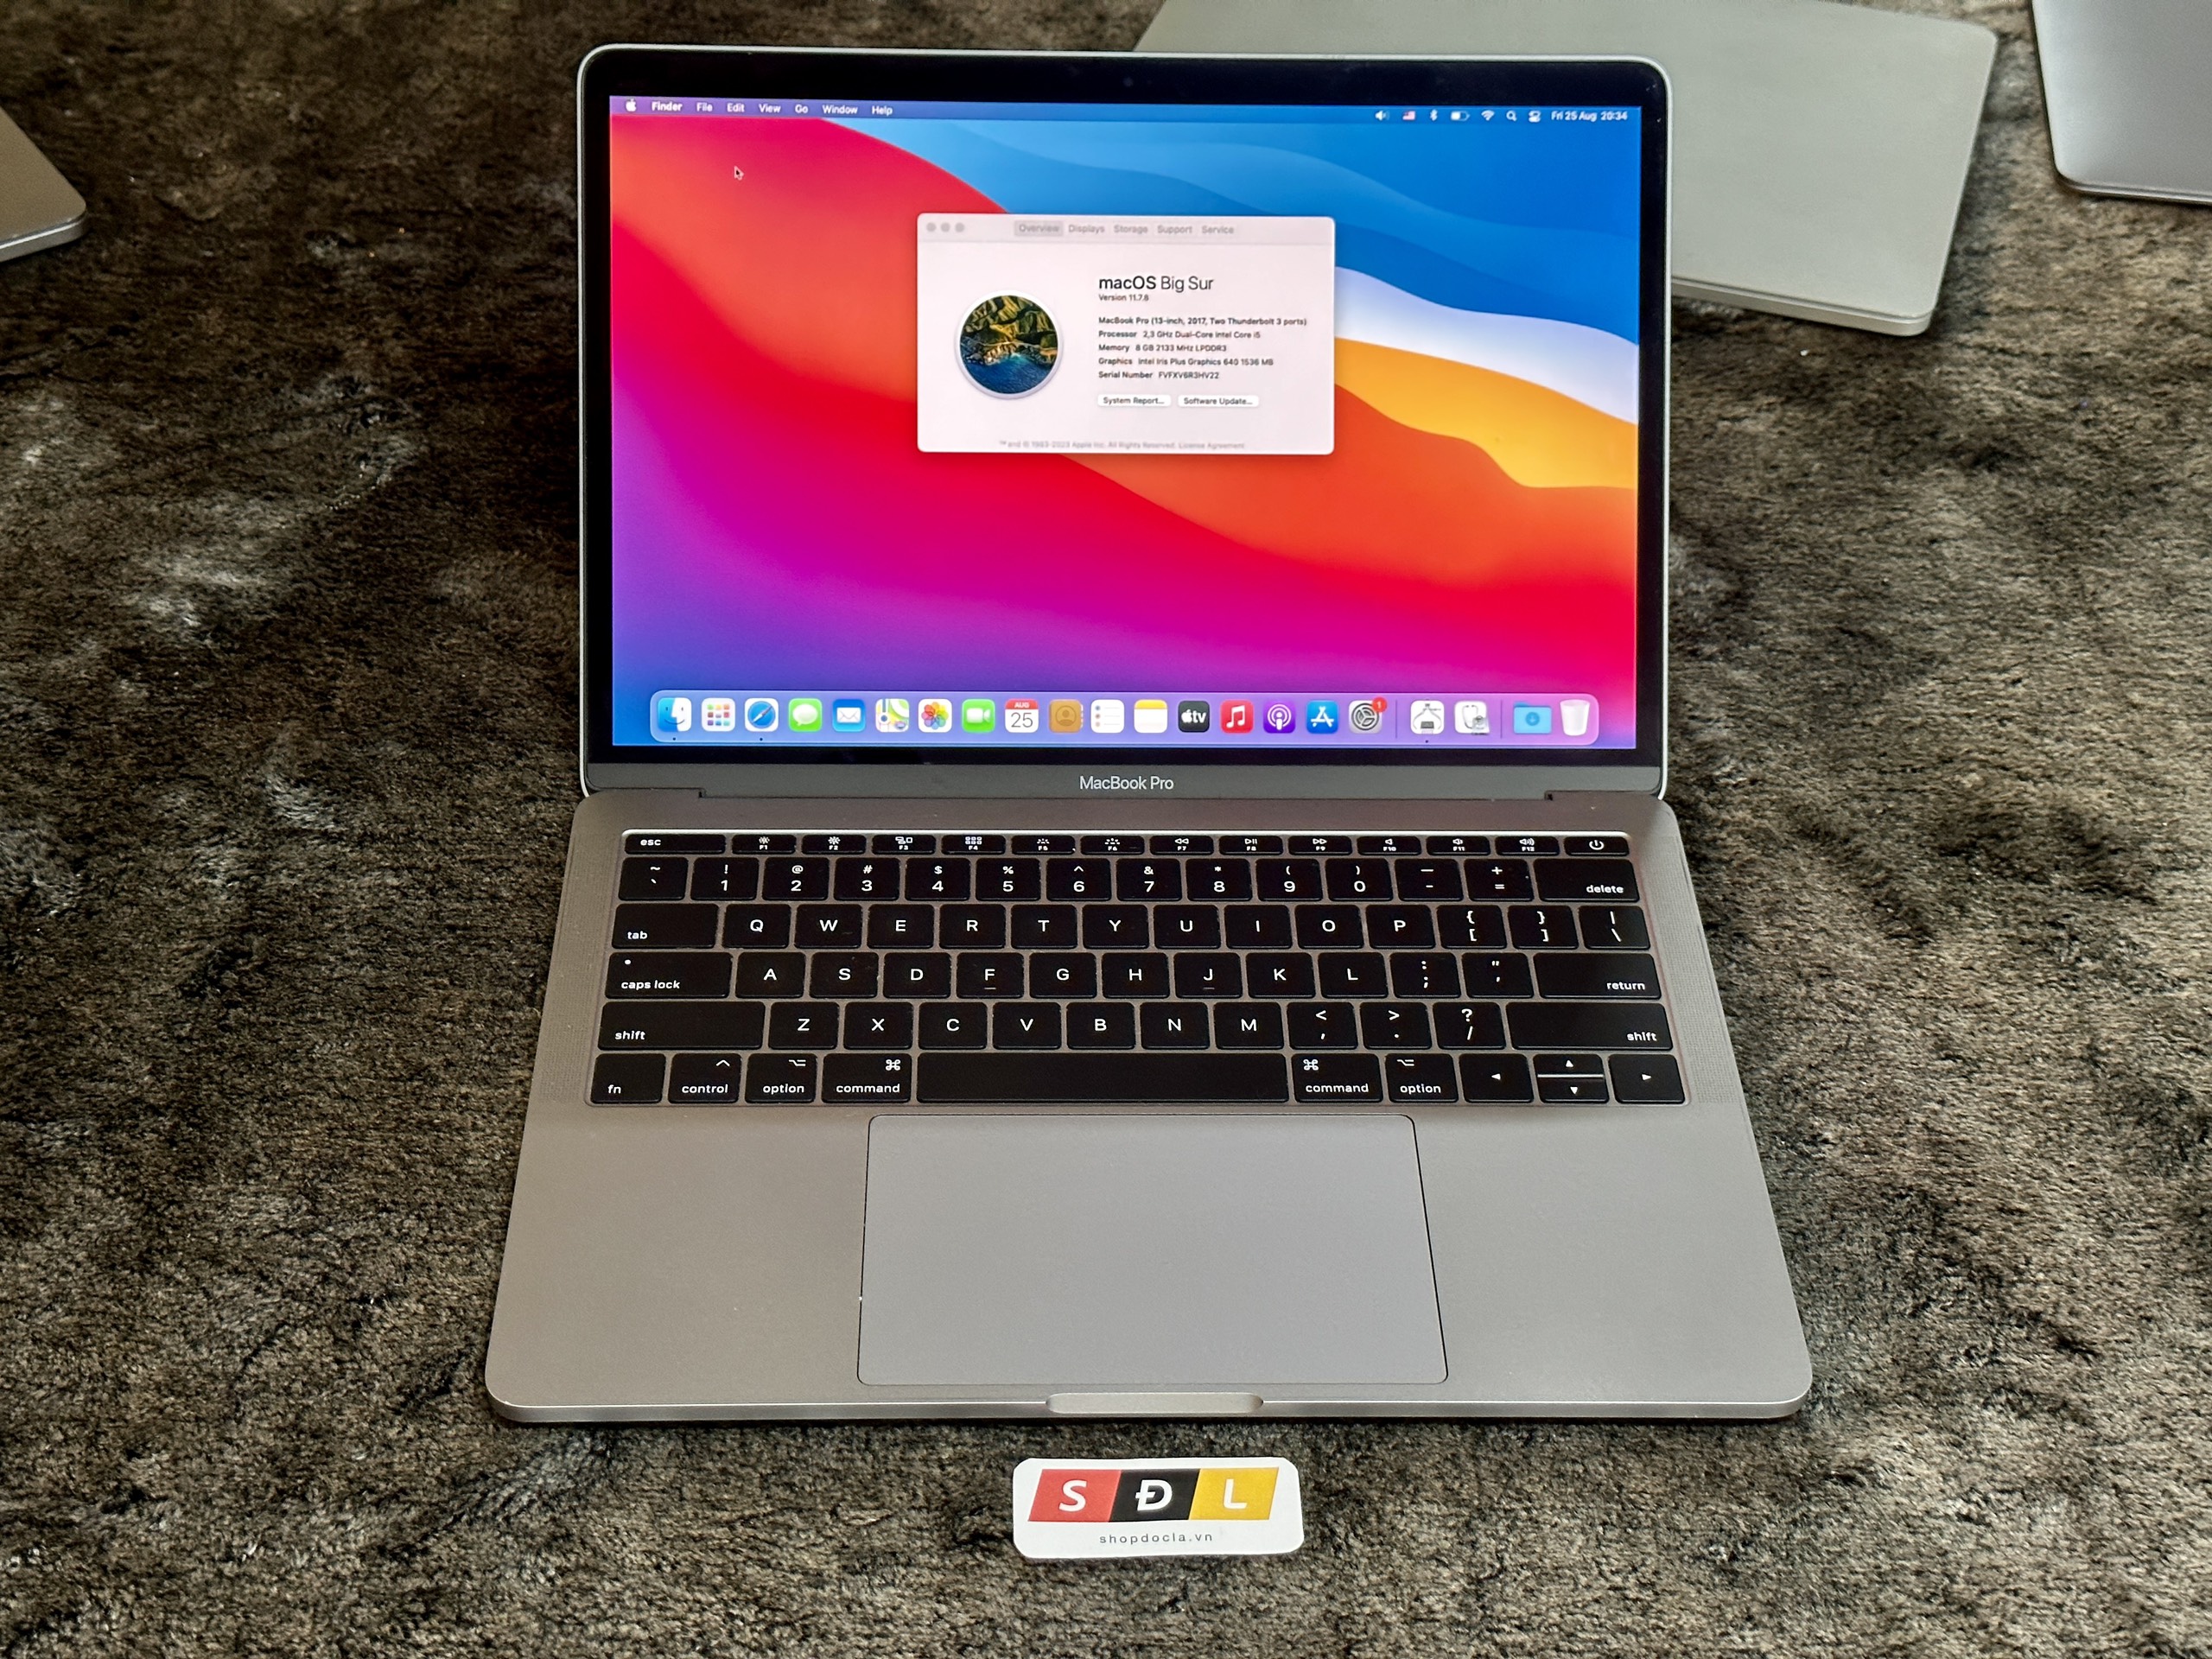 MacBook Pro (13-inch, 2017, Two Thunderbolt 3 ports) i5 8GB 128GB MPXQ2